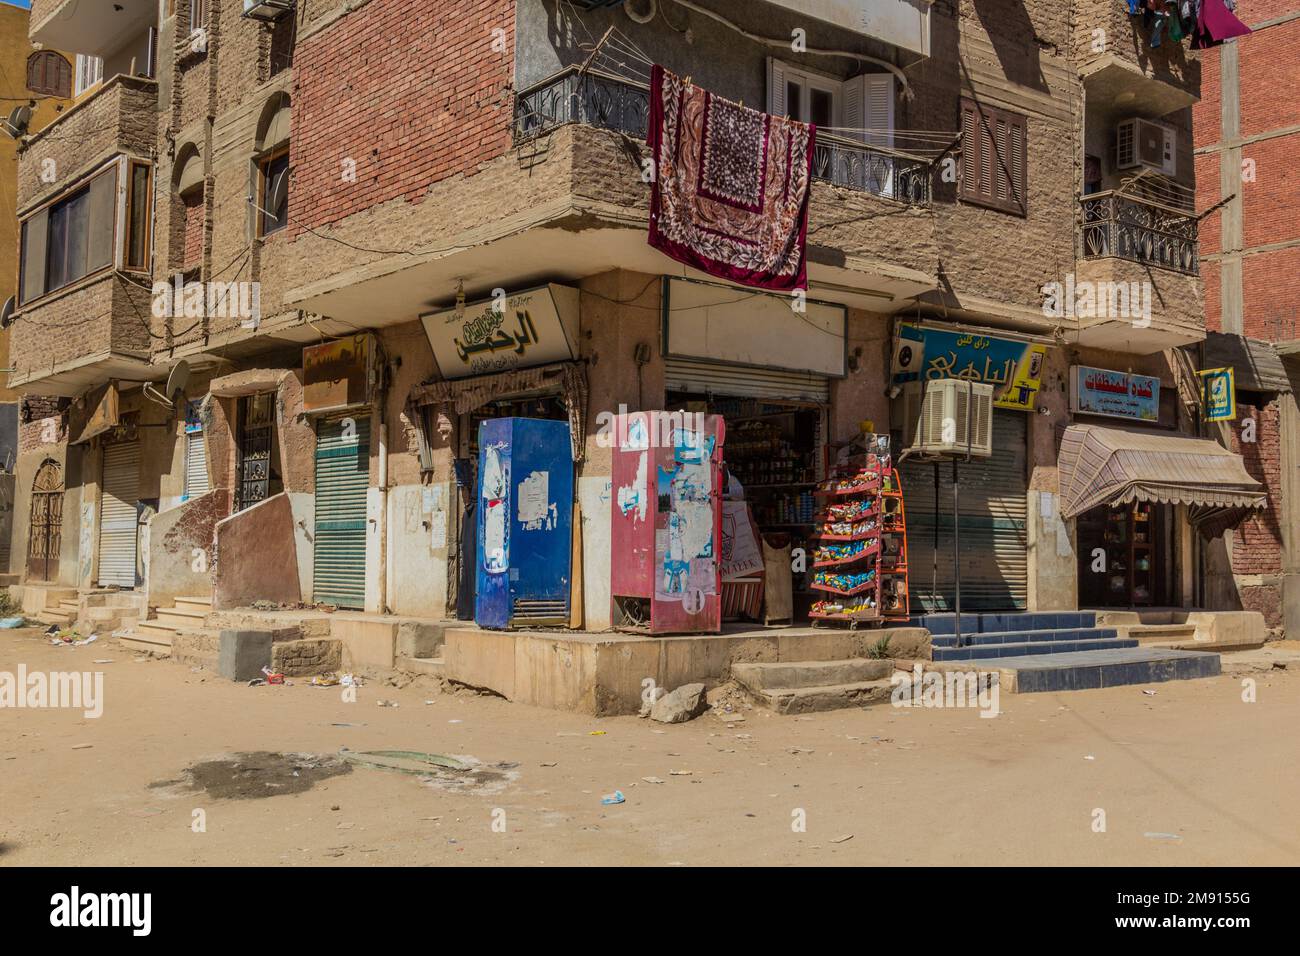 ASWAN, EGYPT - FEB 13, 2019: Small shops in Aswan, Egypt Stock Photo